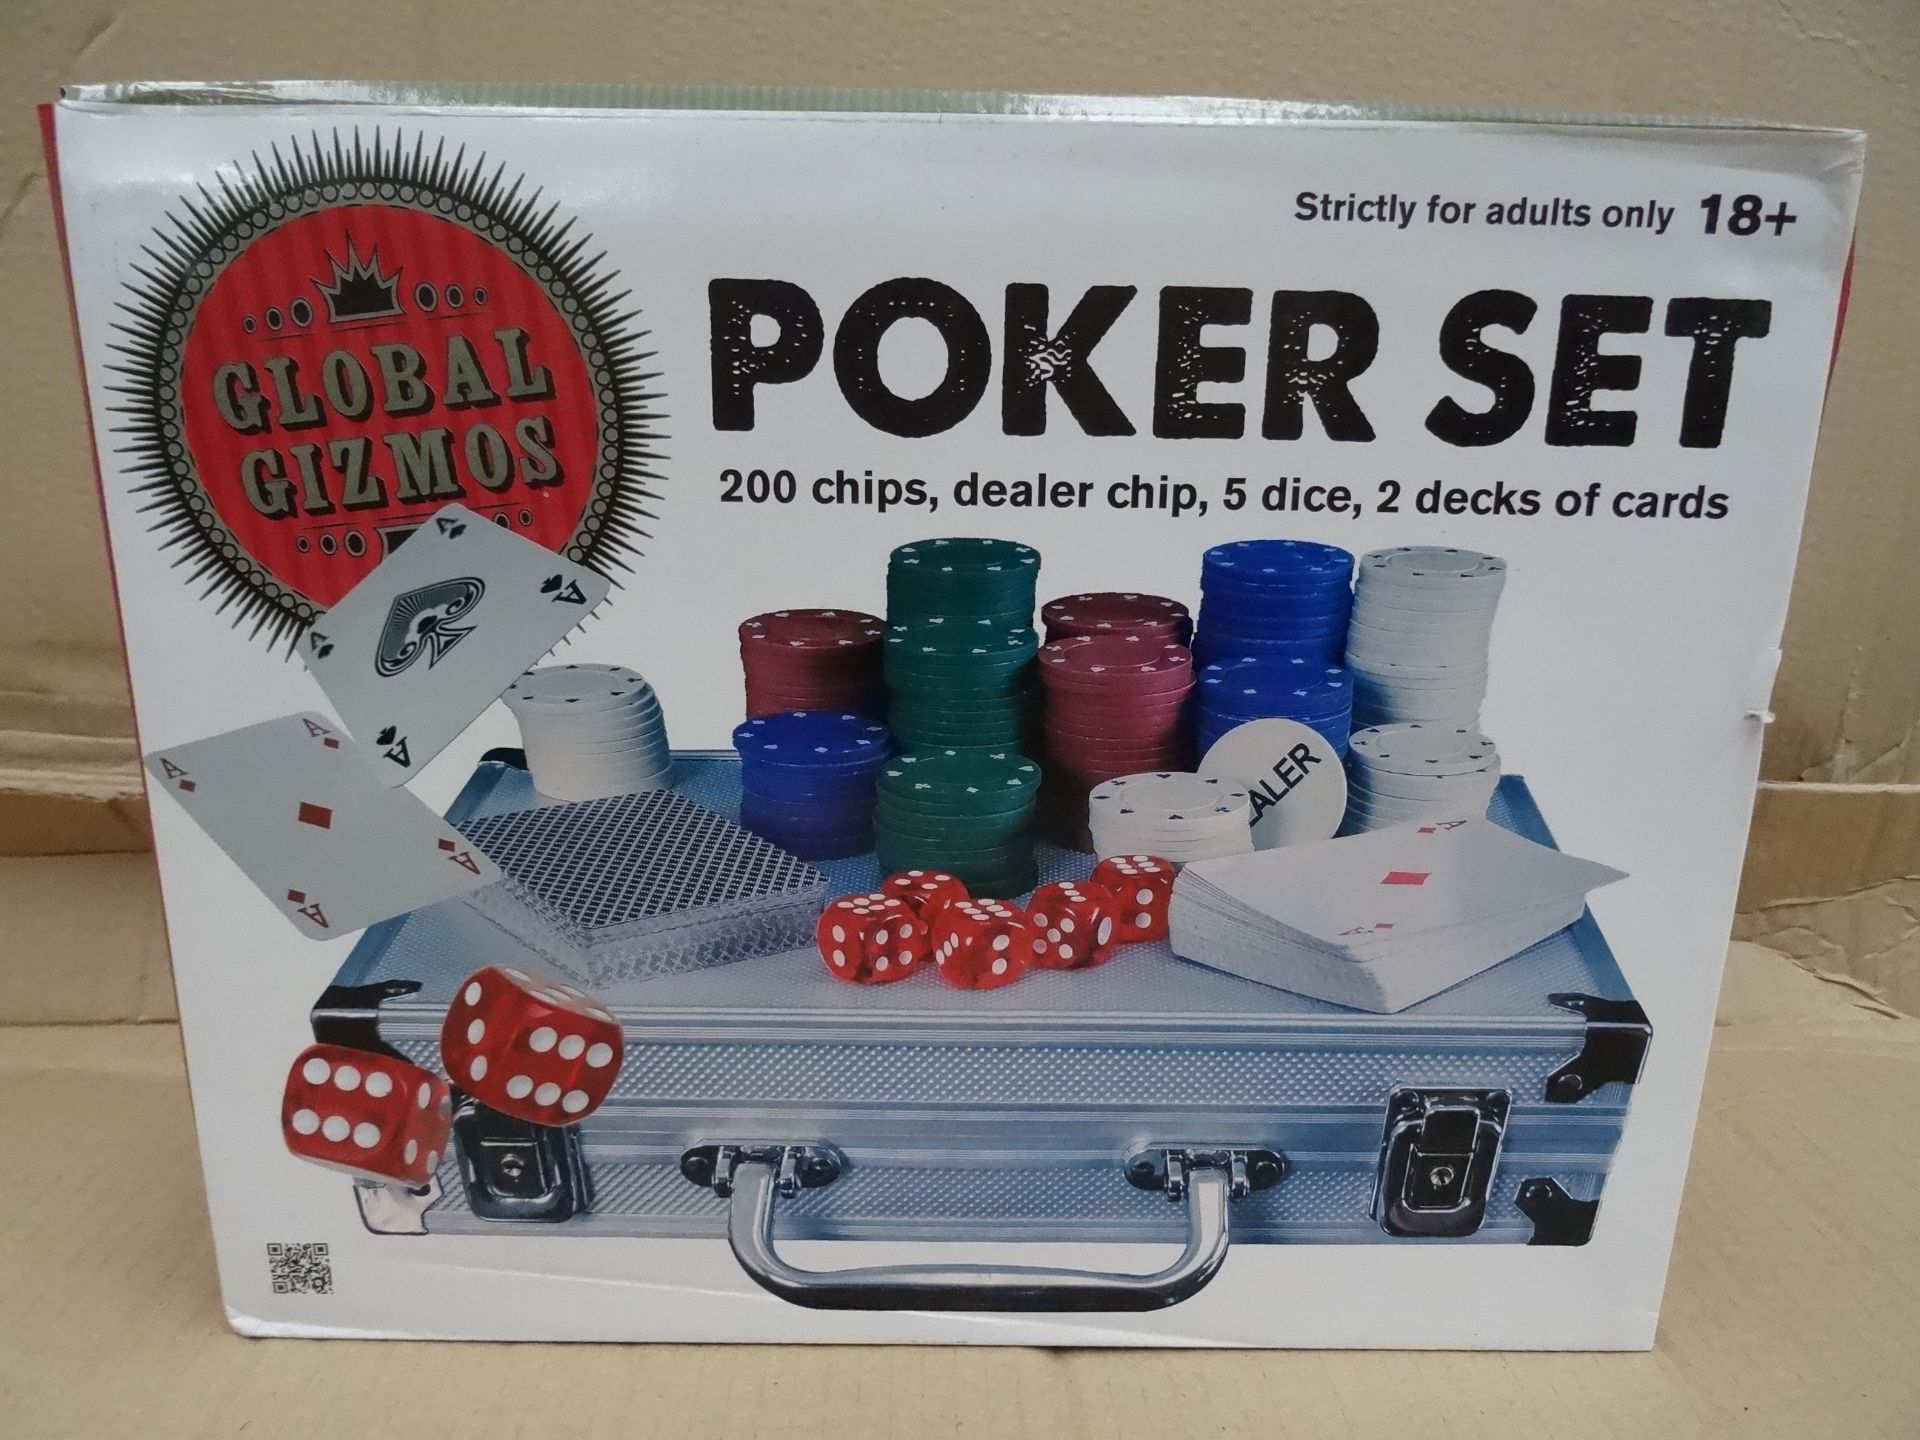 4 x Global Gizmos Poker Sets. 200 Chips, Dealer Chip, 5 Dice, 2 decks of Cards and Metal Carry